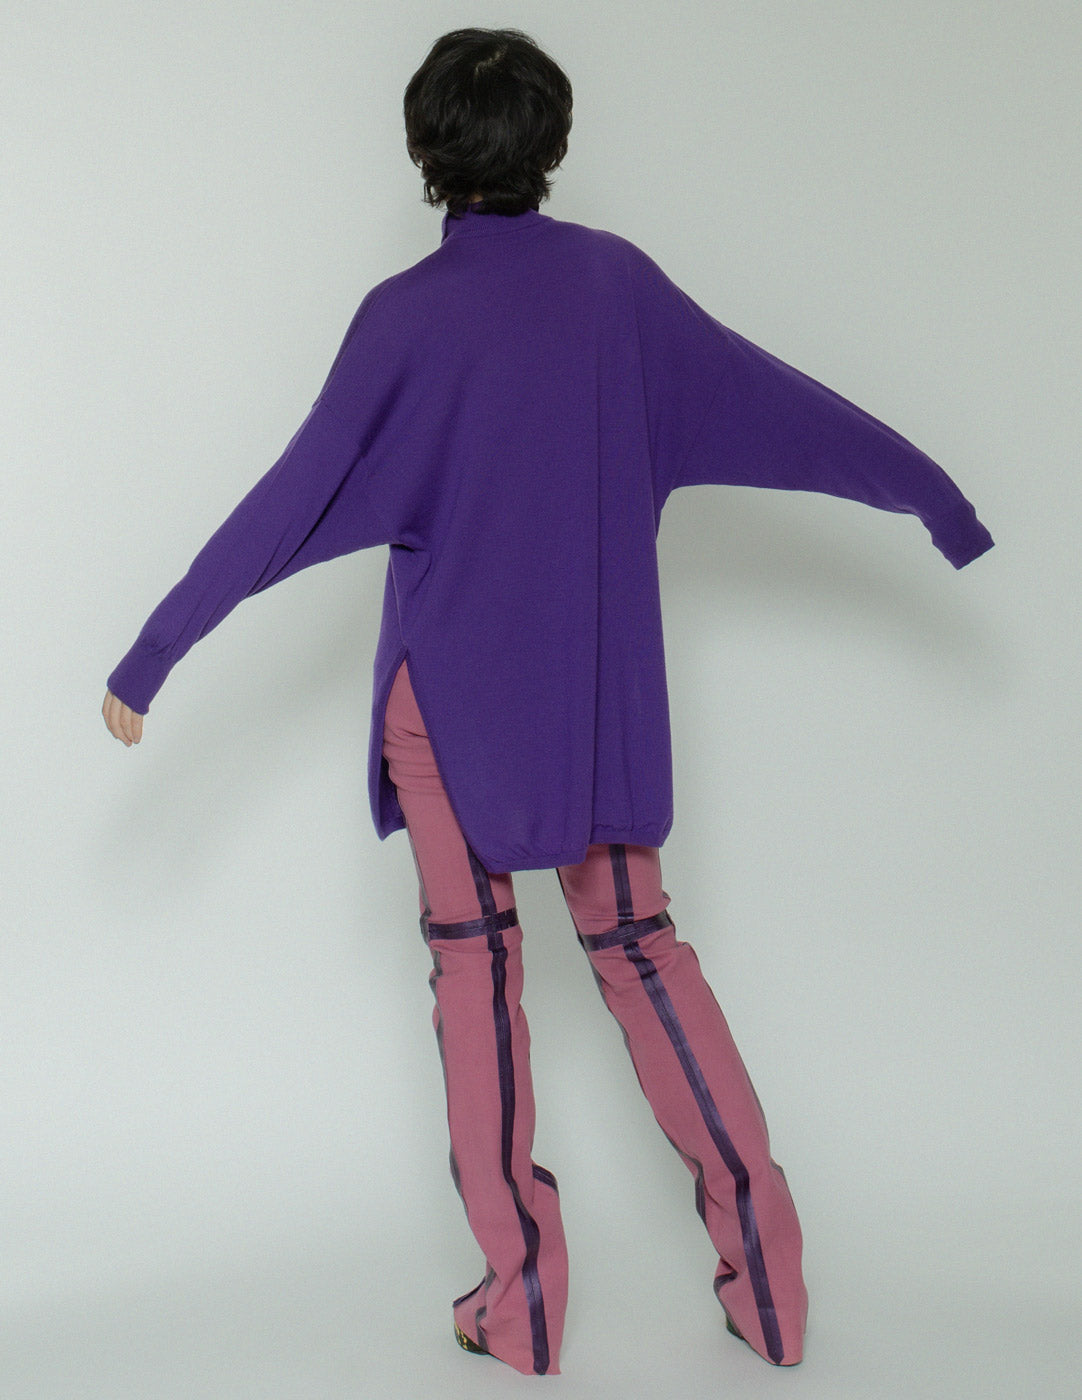 Gianni Versace vintage purple wool sweater